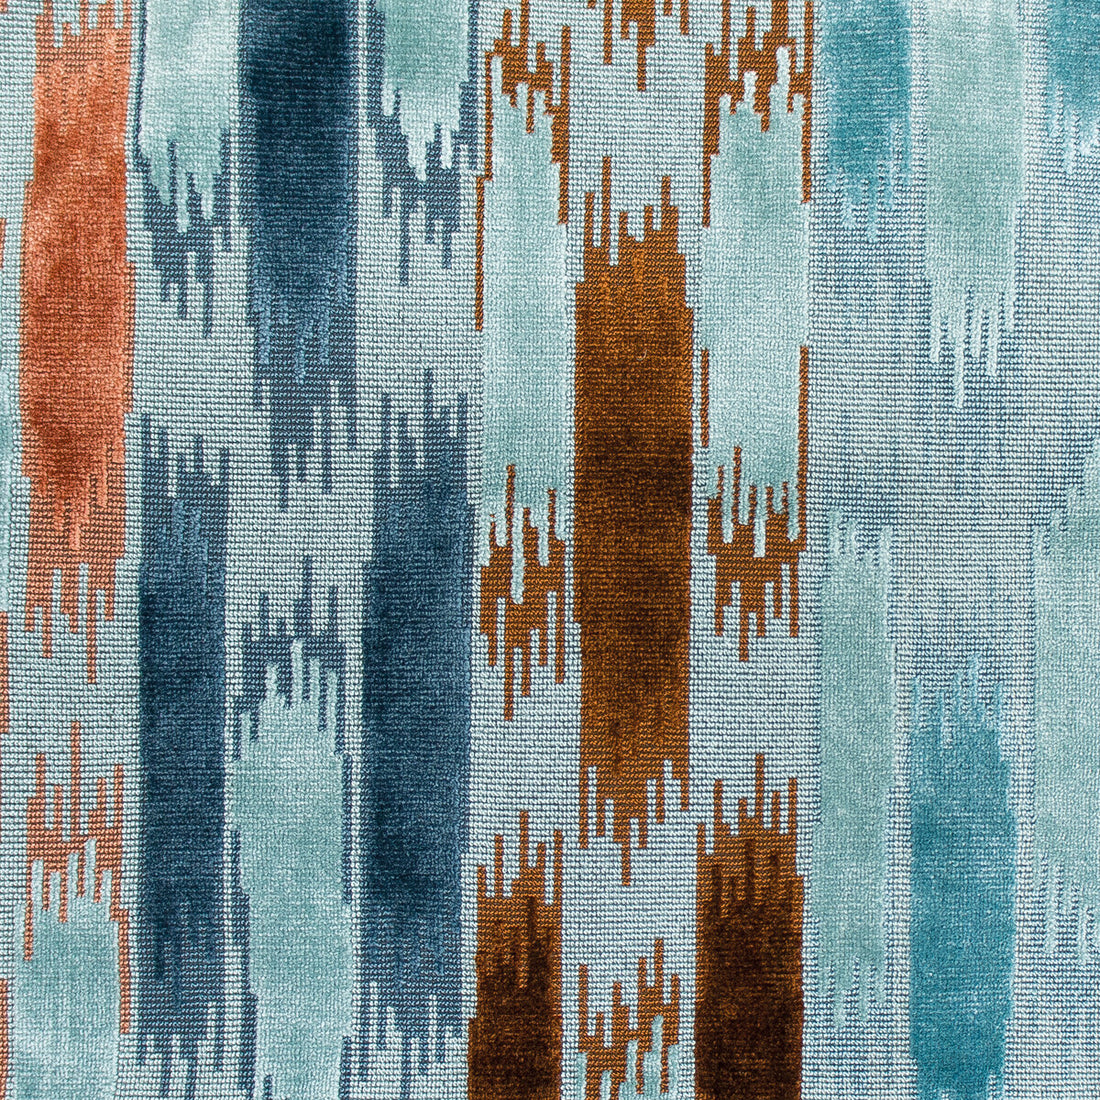 Aragon fabric in azul/teja color - pattern GDT5566.001.0 - by Gaston y Daniela in the Gaston Nuevo Mundo collection